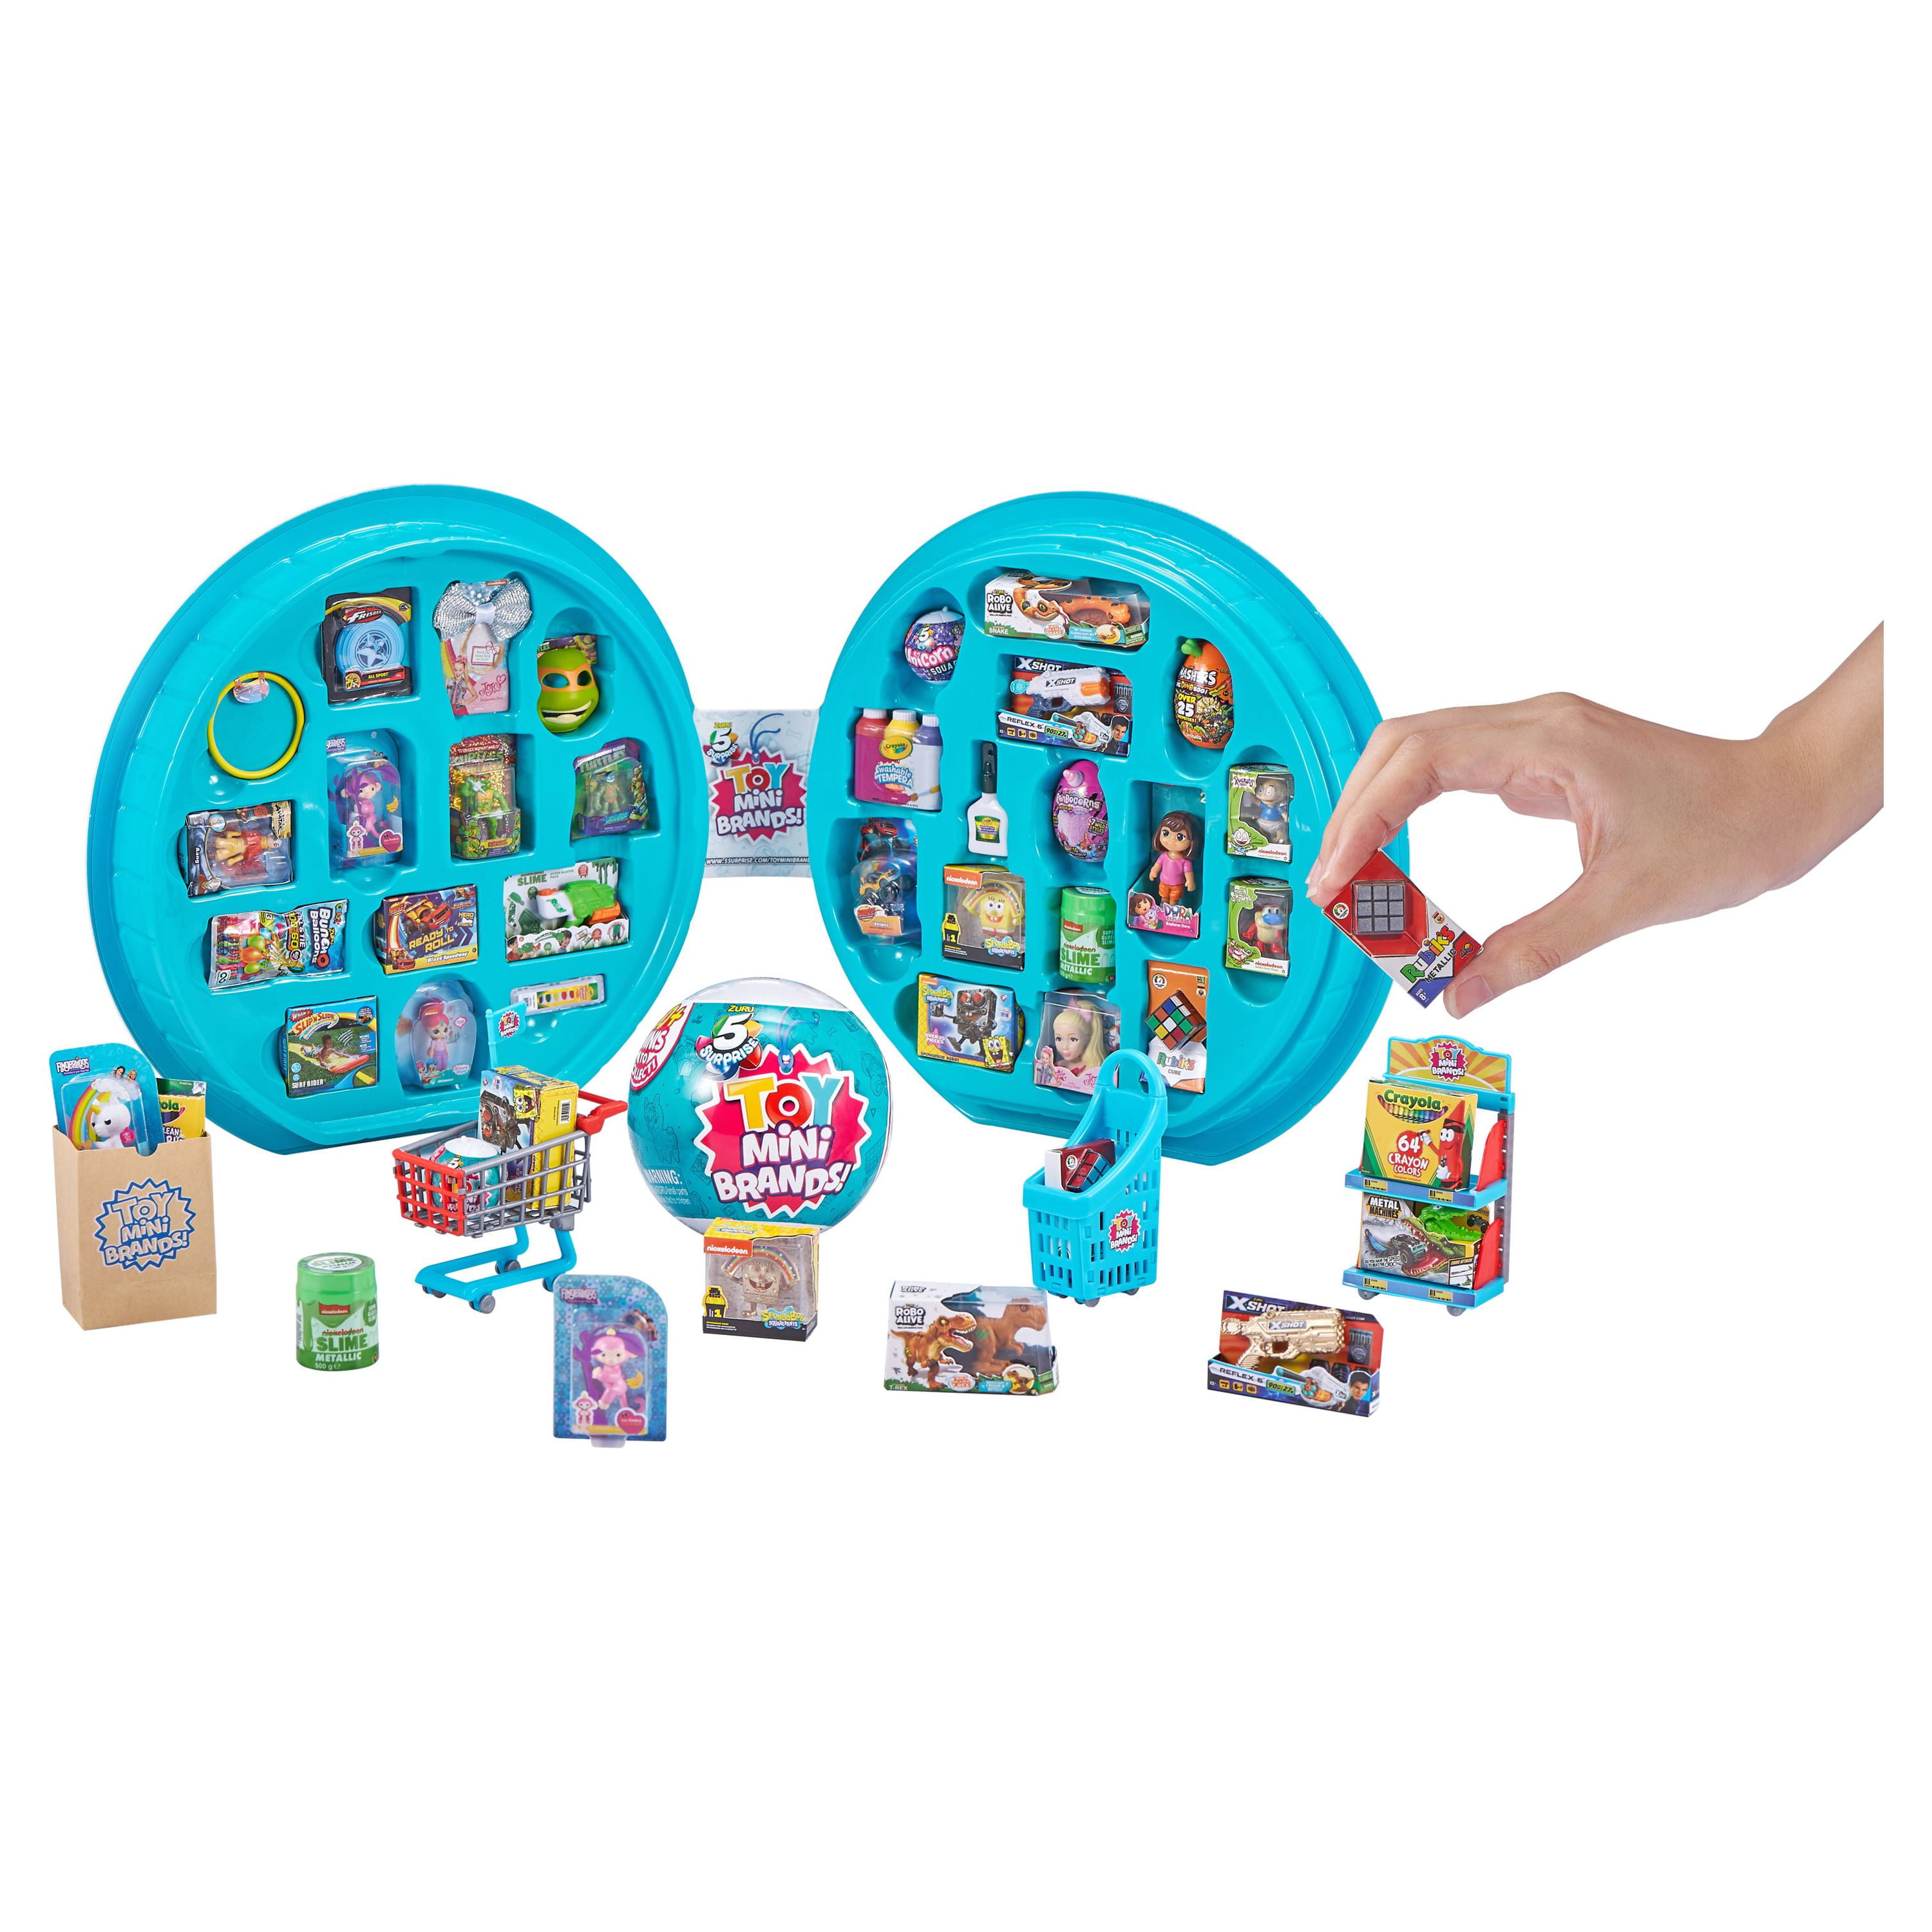 5 Surprise Mini Brands Collectors Case, Holds 30 Minis, Includes 2 Mini  Toys